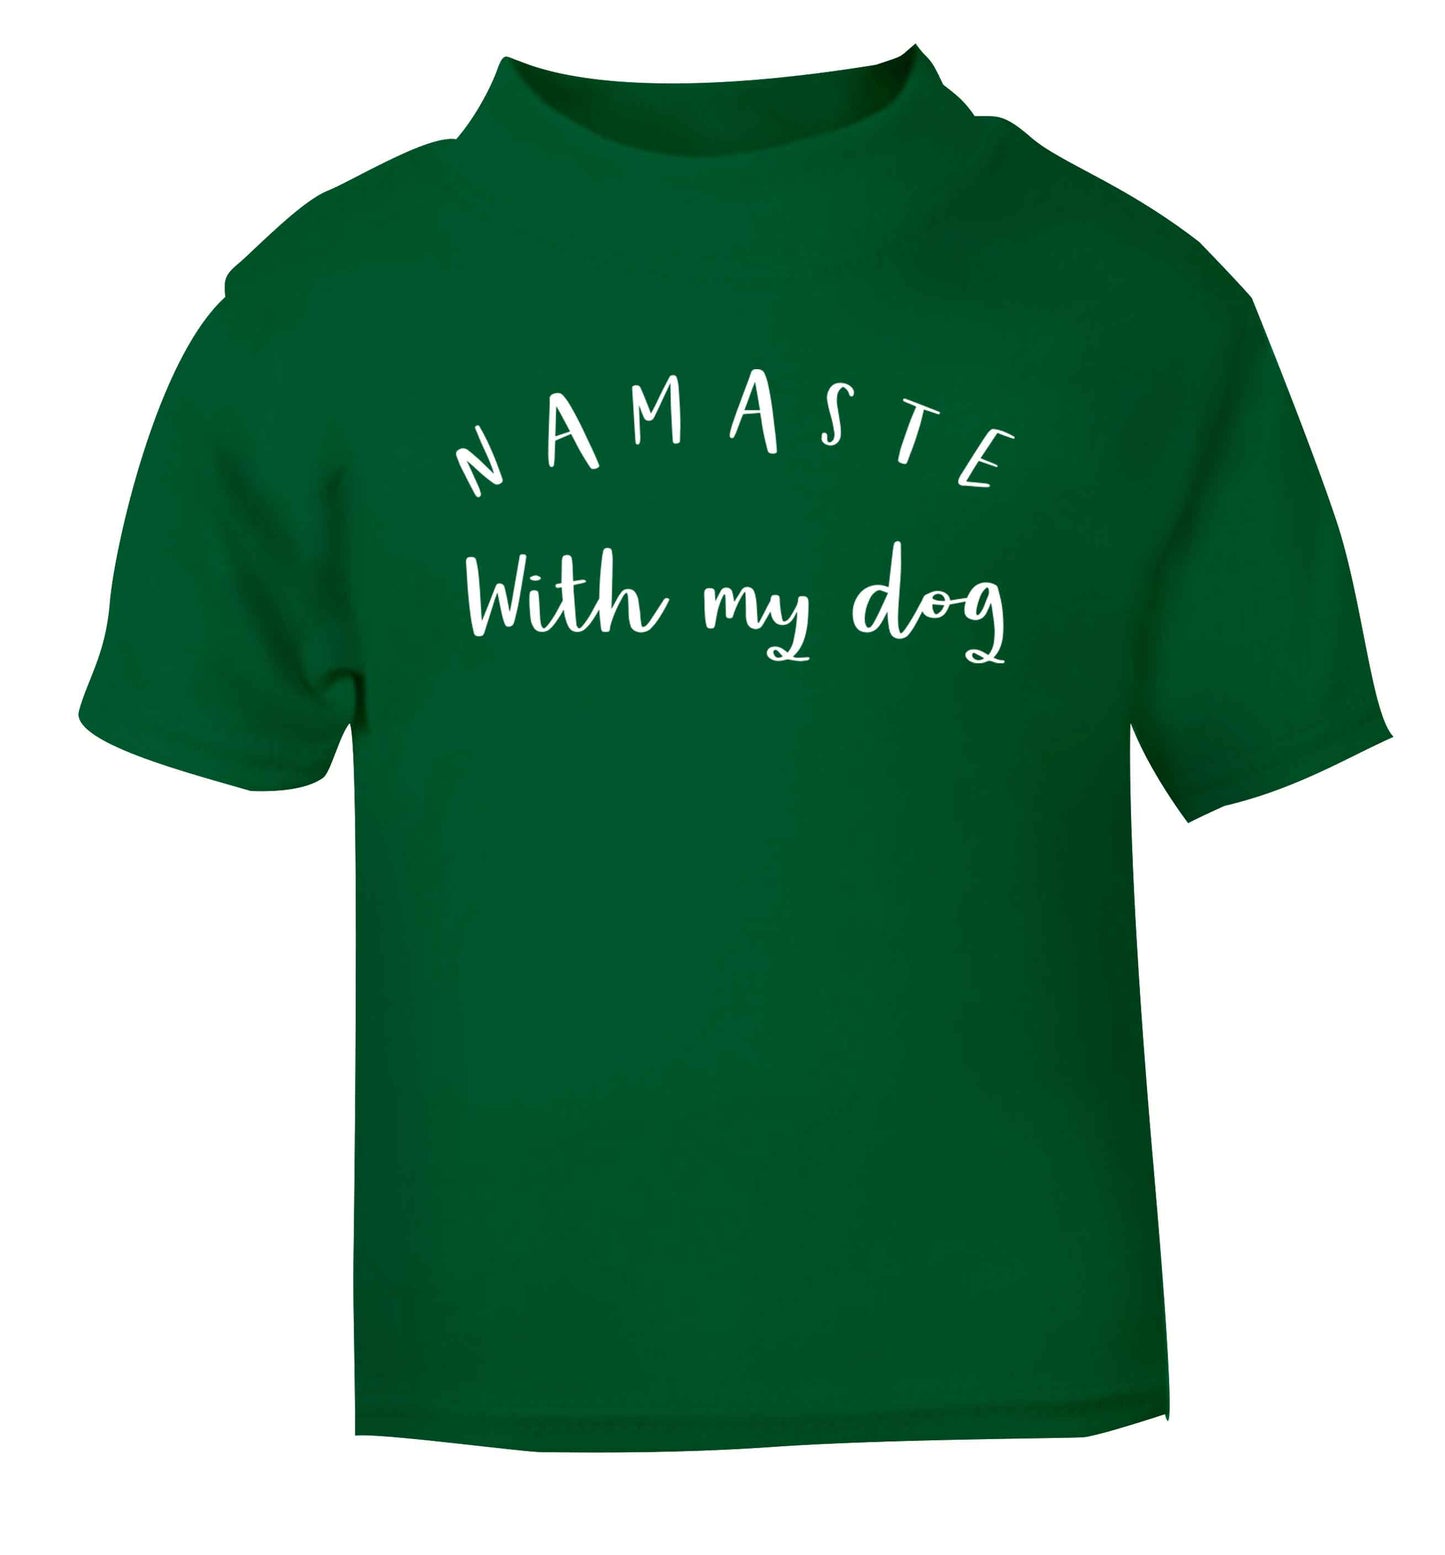 Namaste with my dog green Baby Toddler Tshirt 2 Years